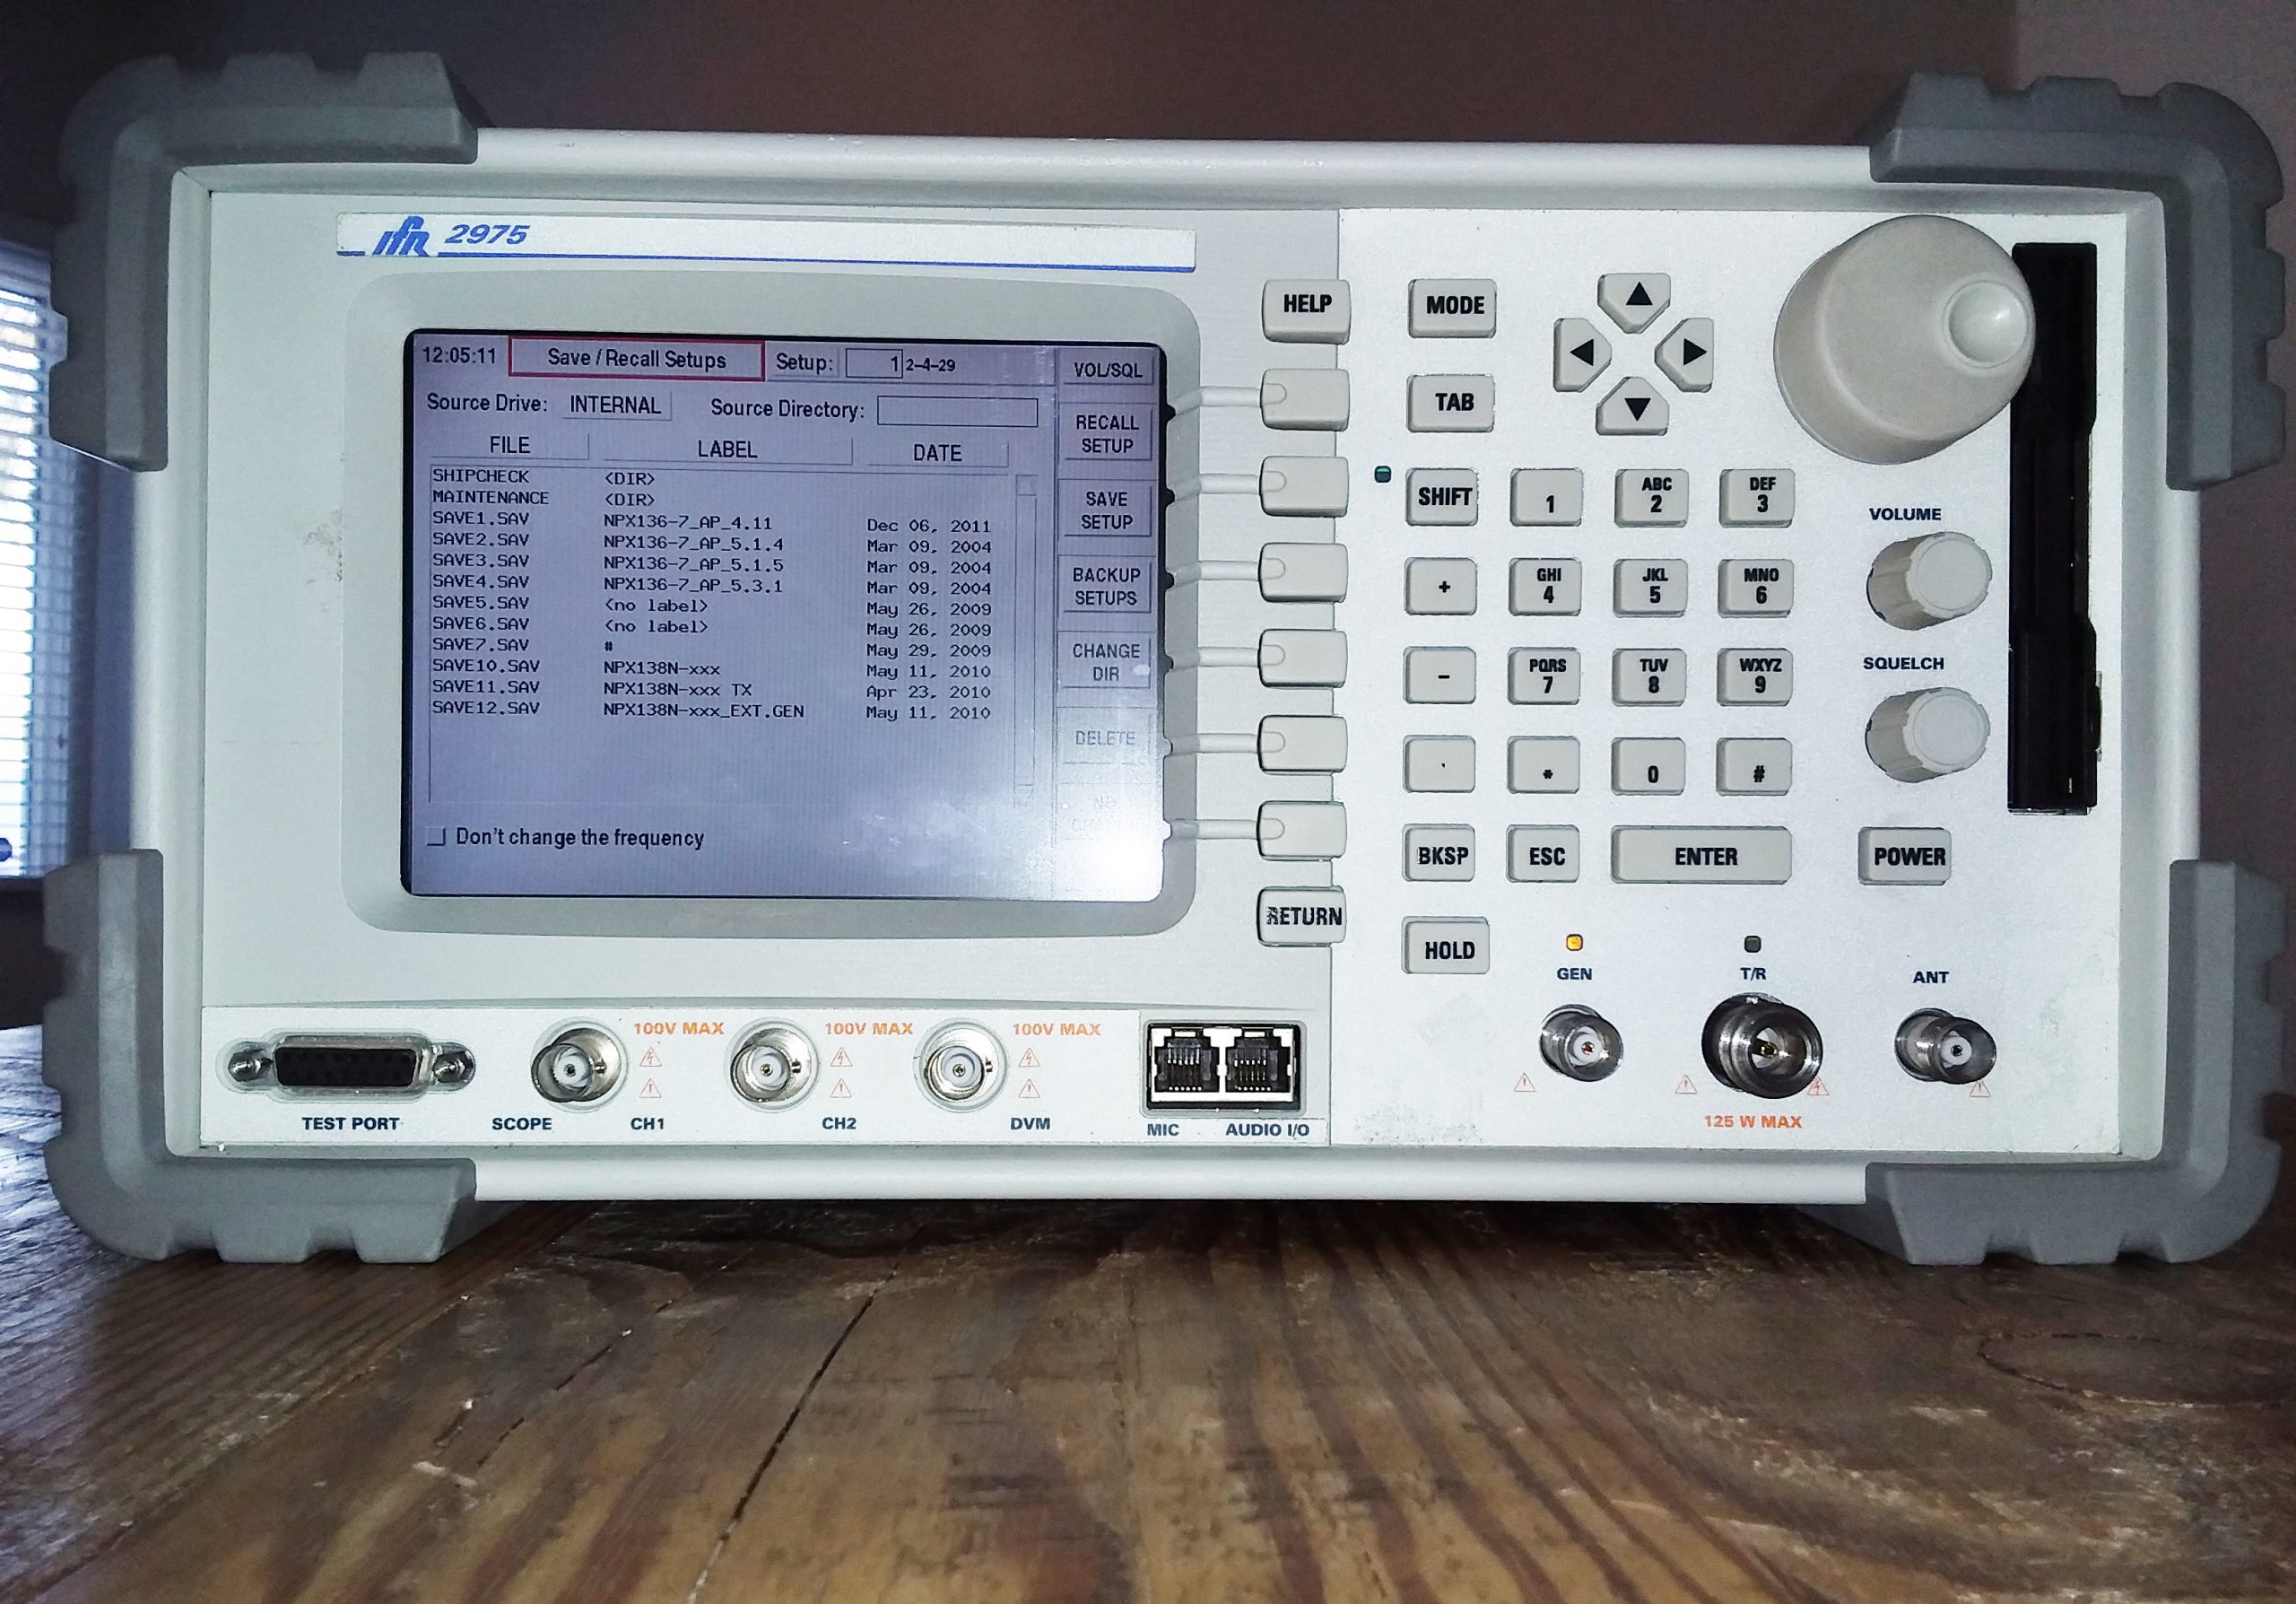 Buy IFR-2975-Communications Test Set-46383